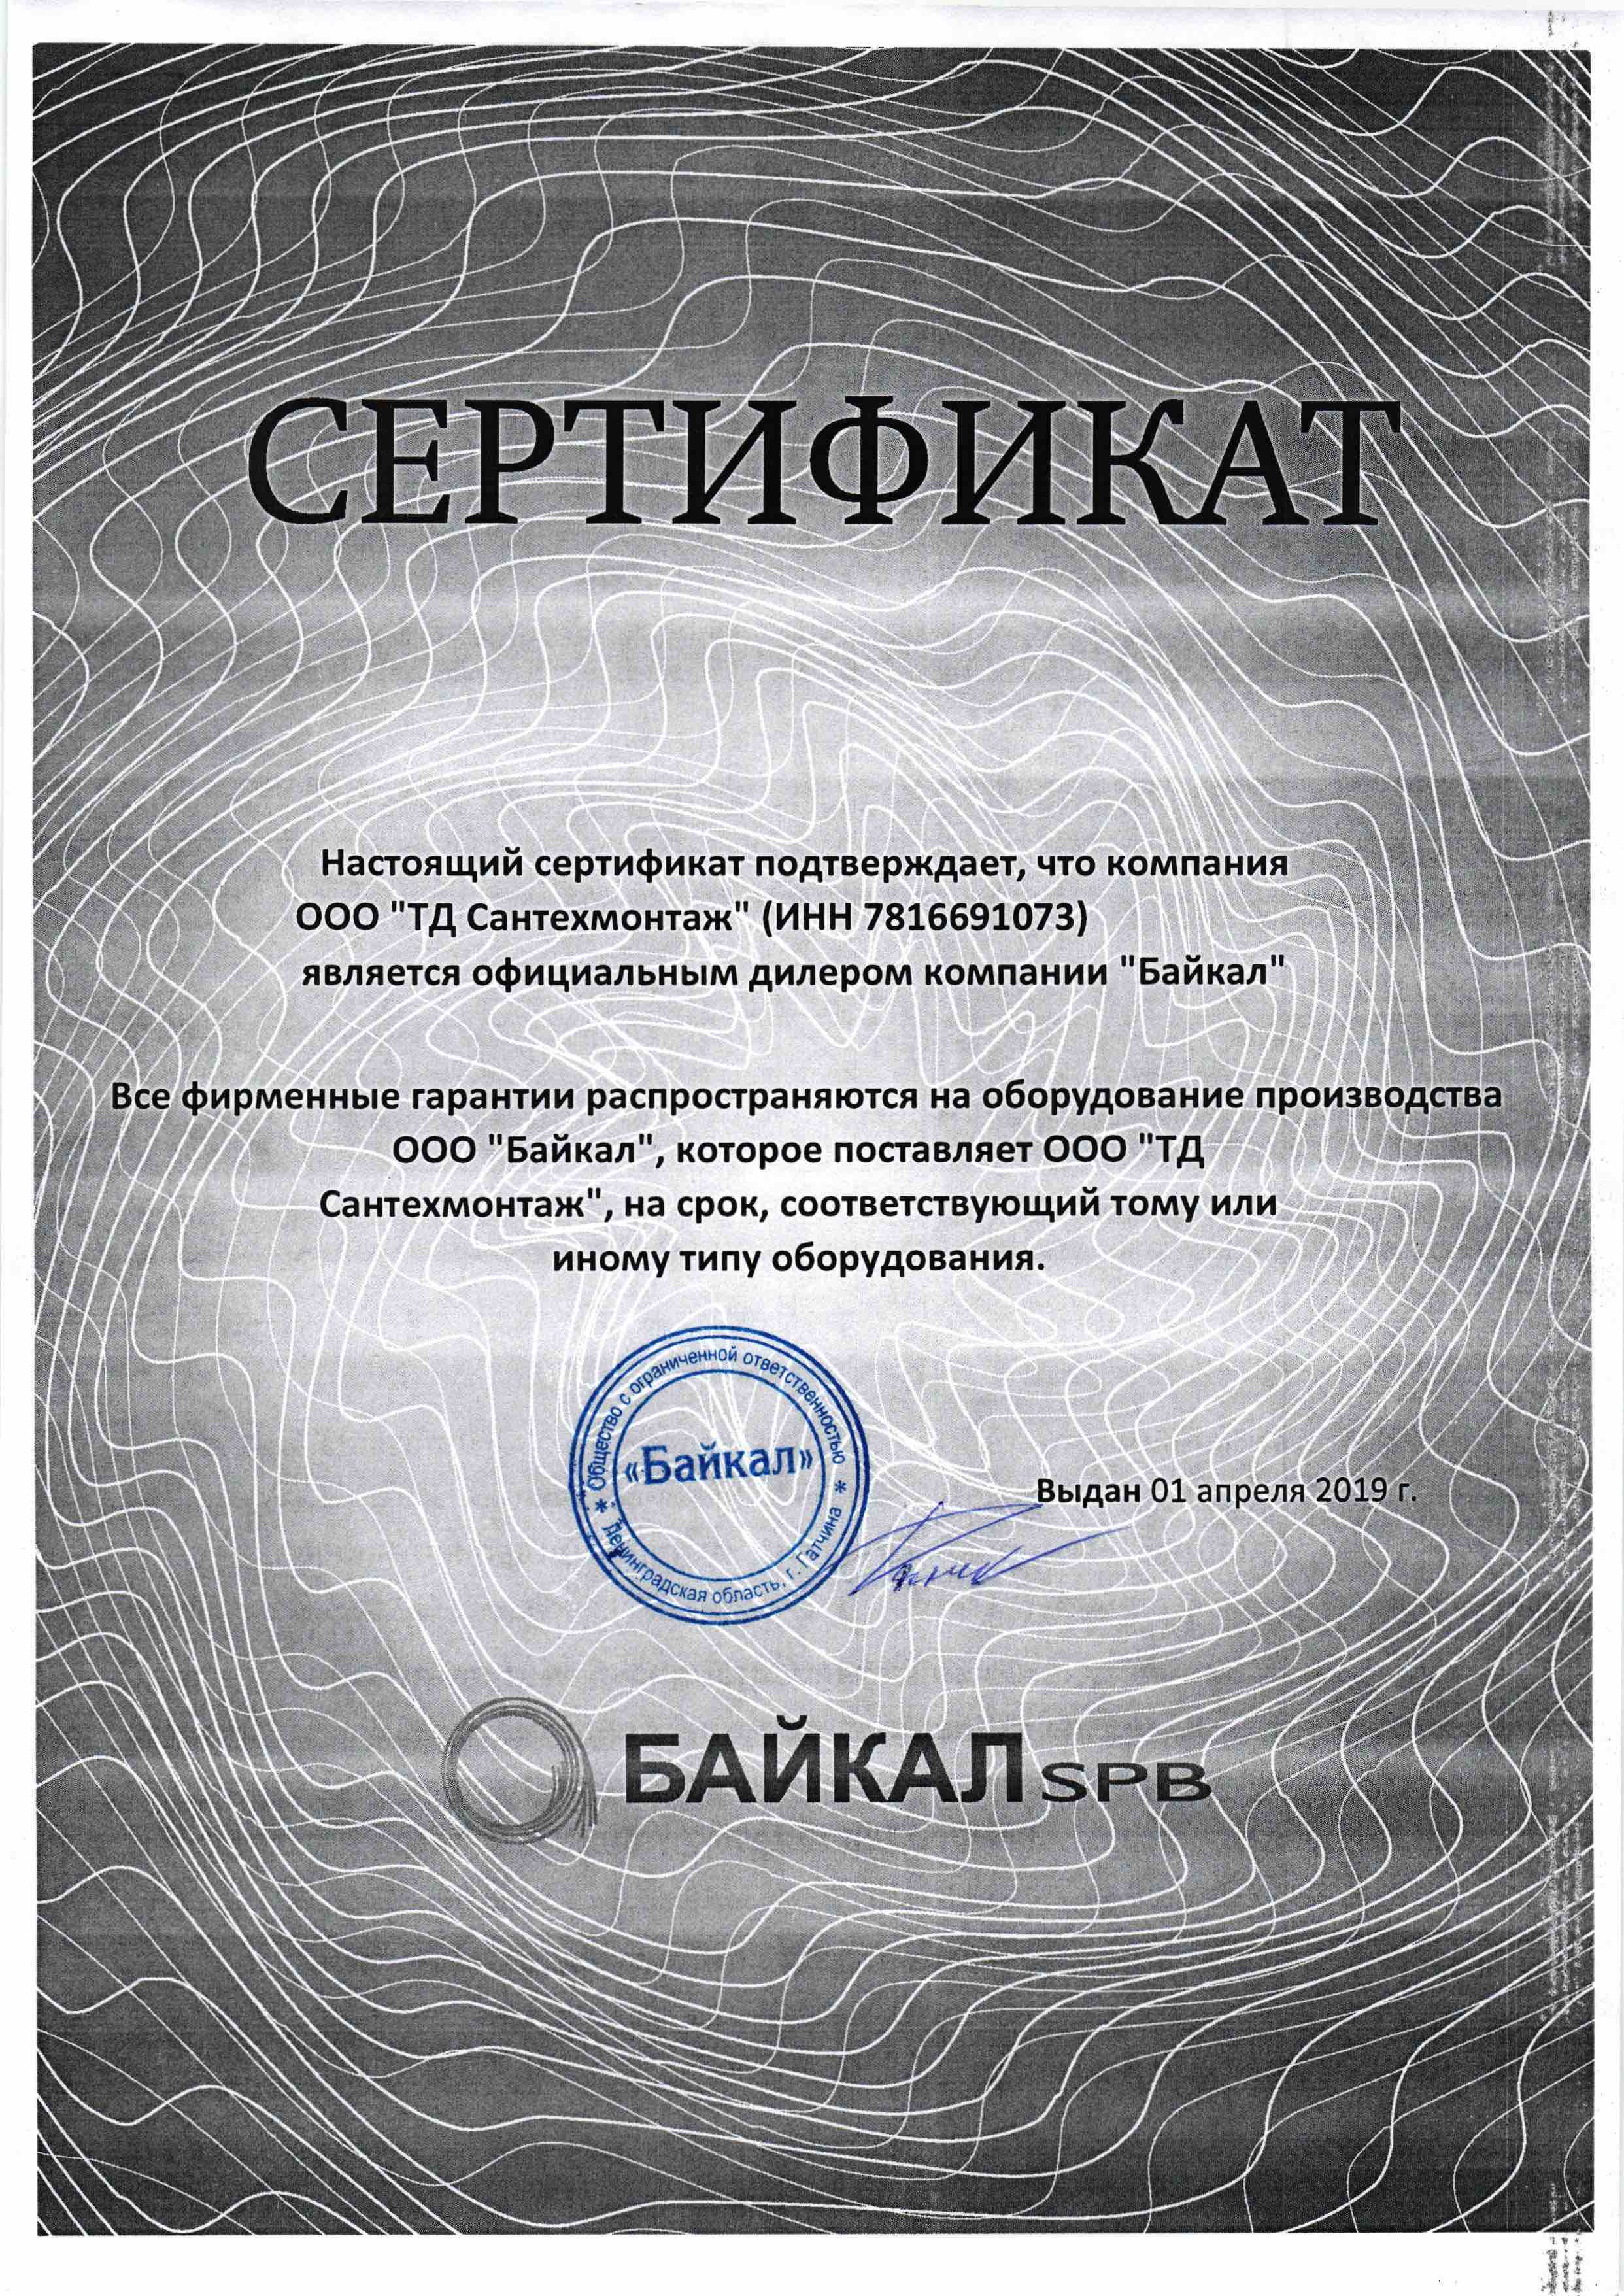 Сертификат дилера Флотенк